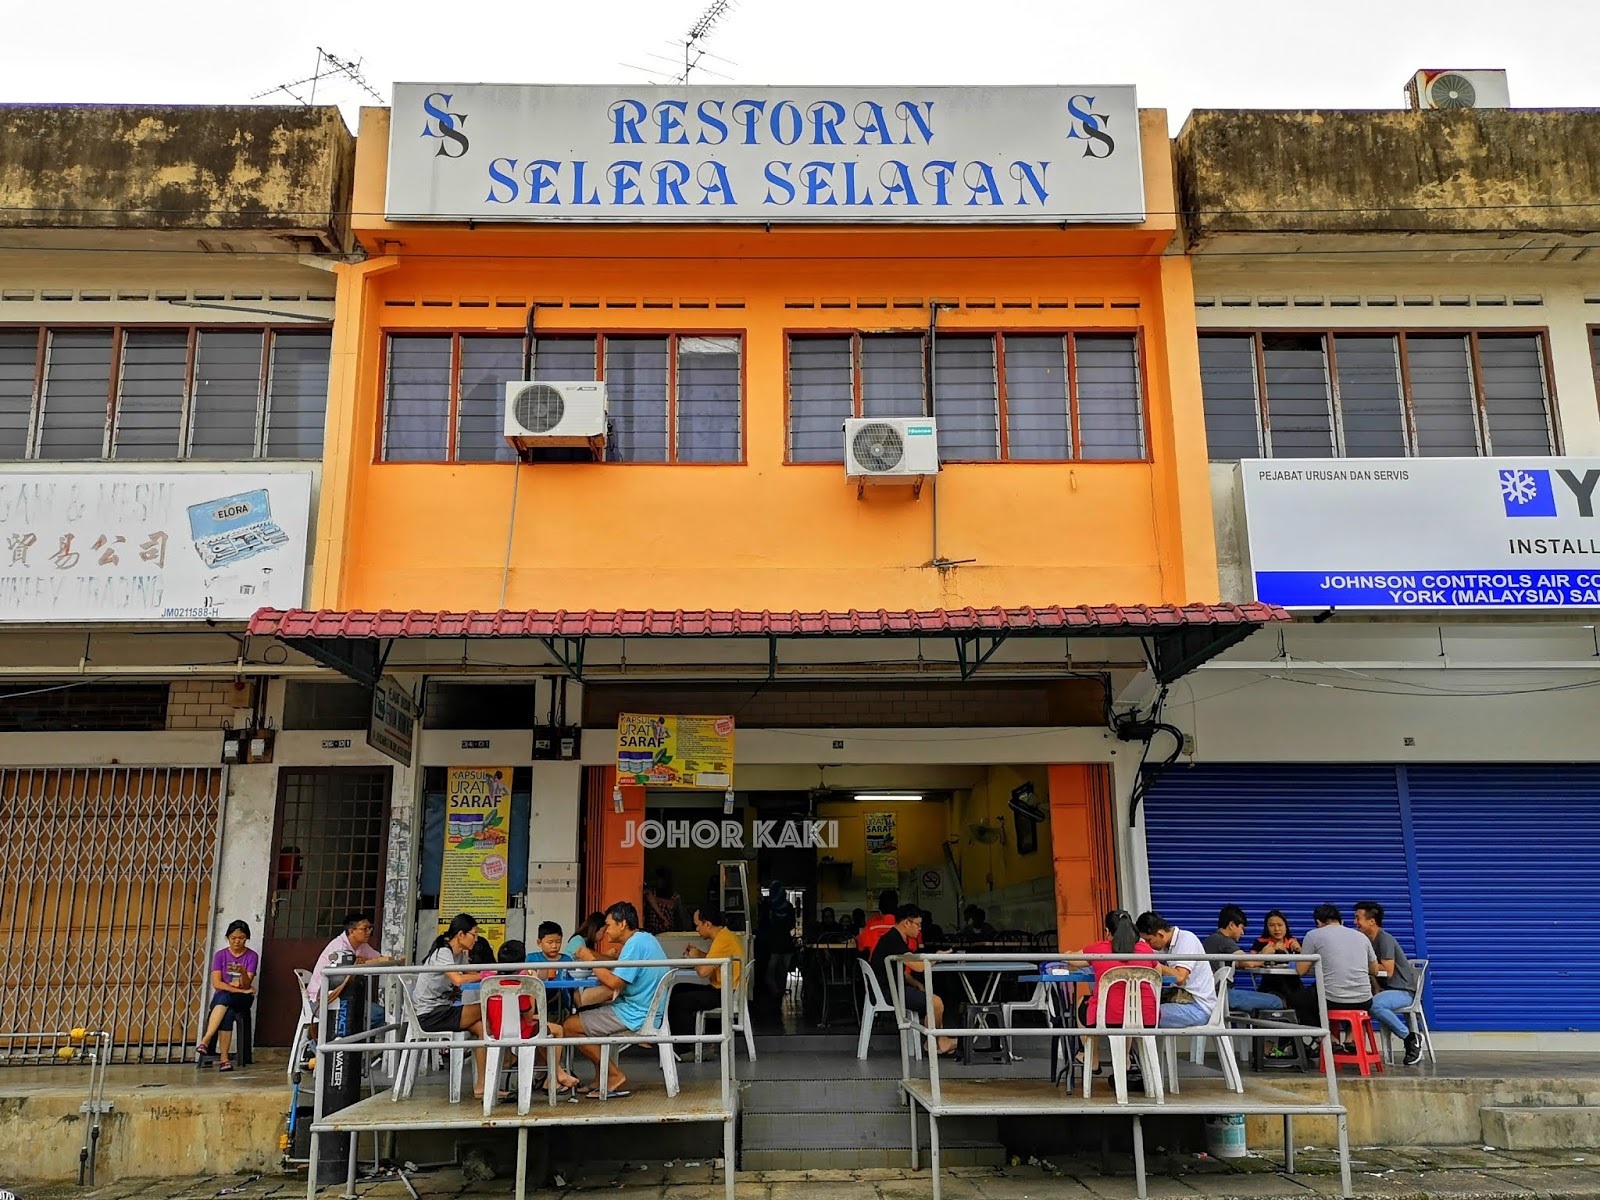 What Best Food to Eat in Johor Jaya Ros Merah? |Tony Johor Kaki Travels